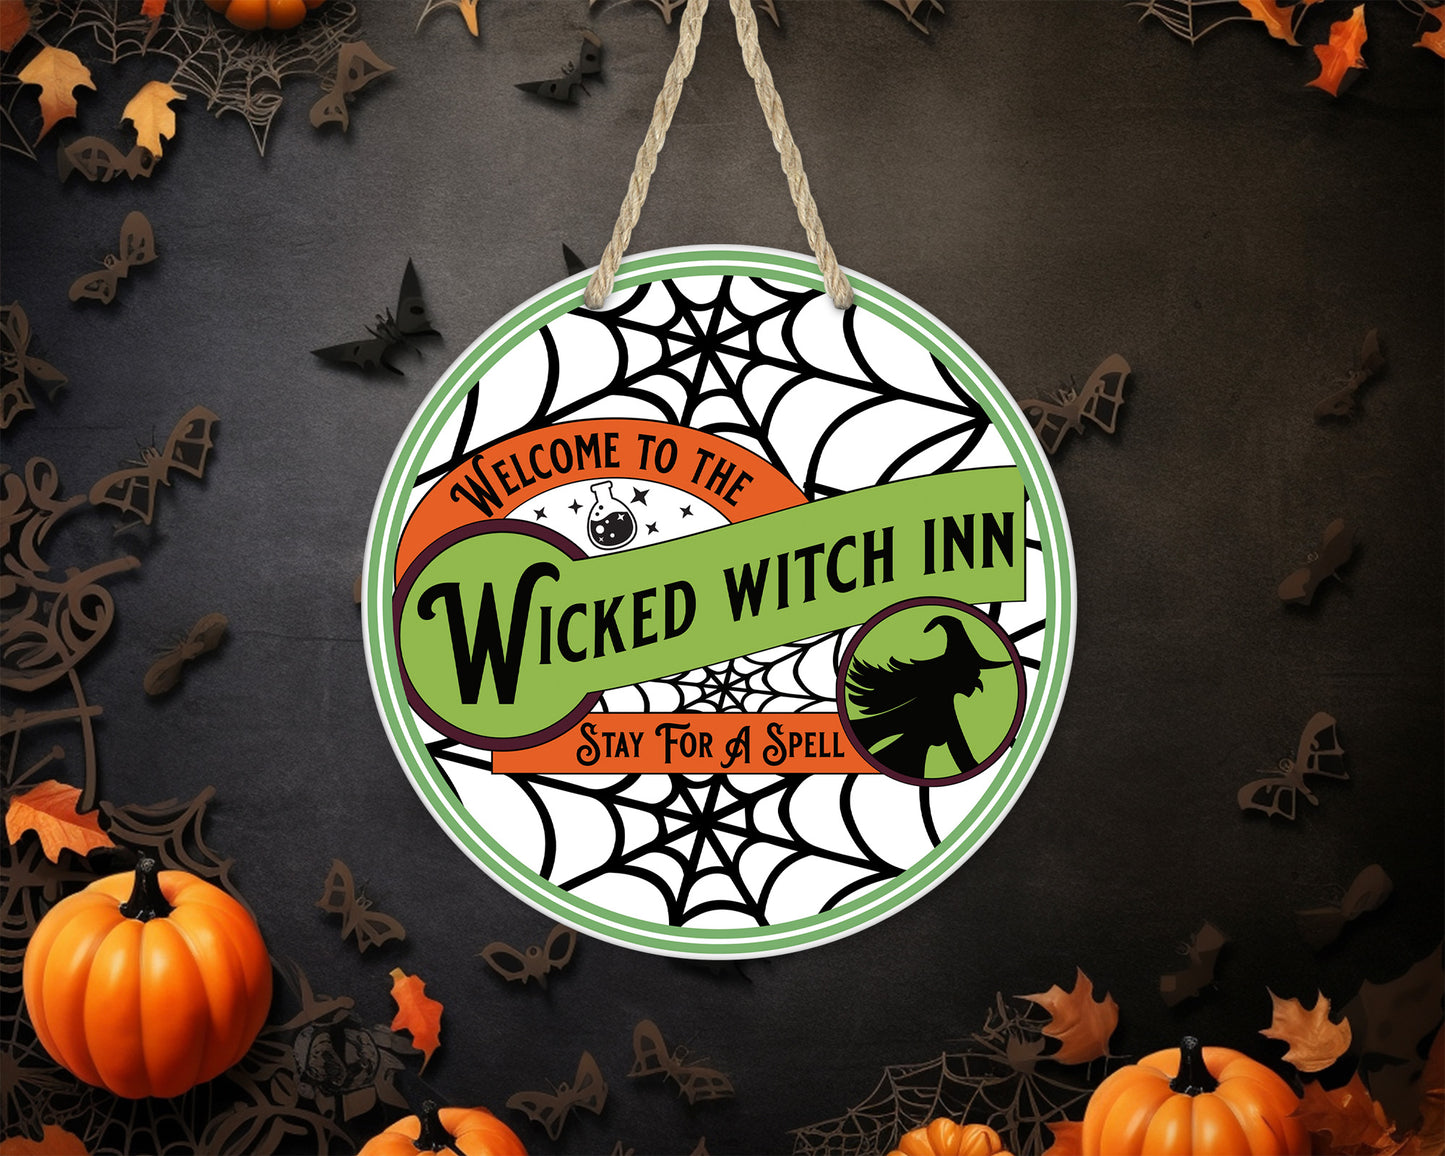 Wicked Witch Inn - 10" Round Door Hanger